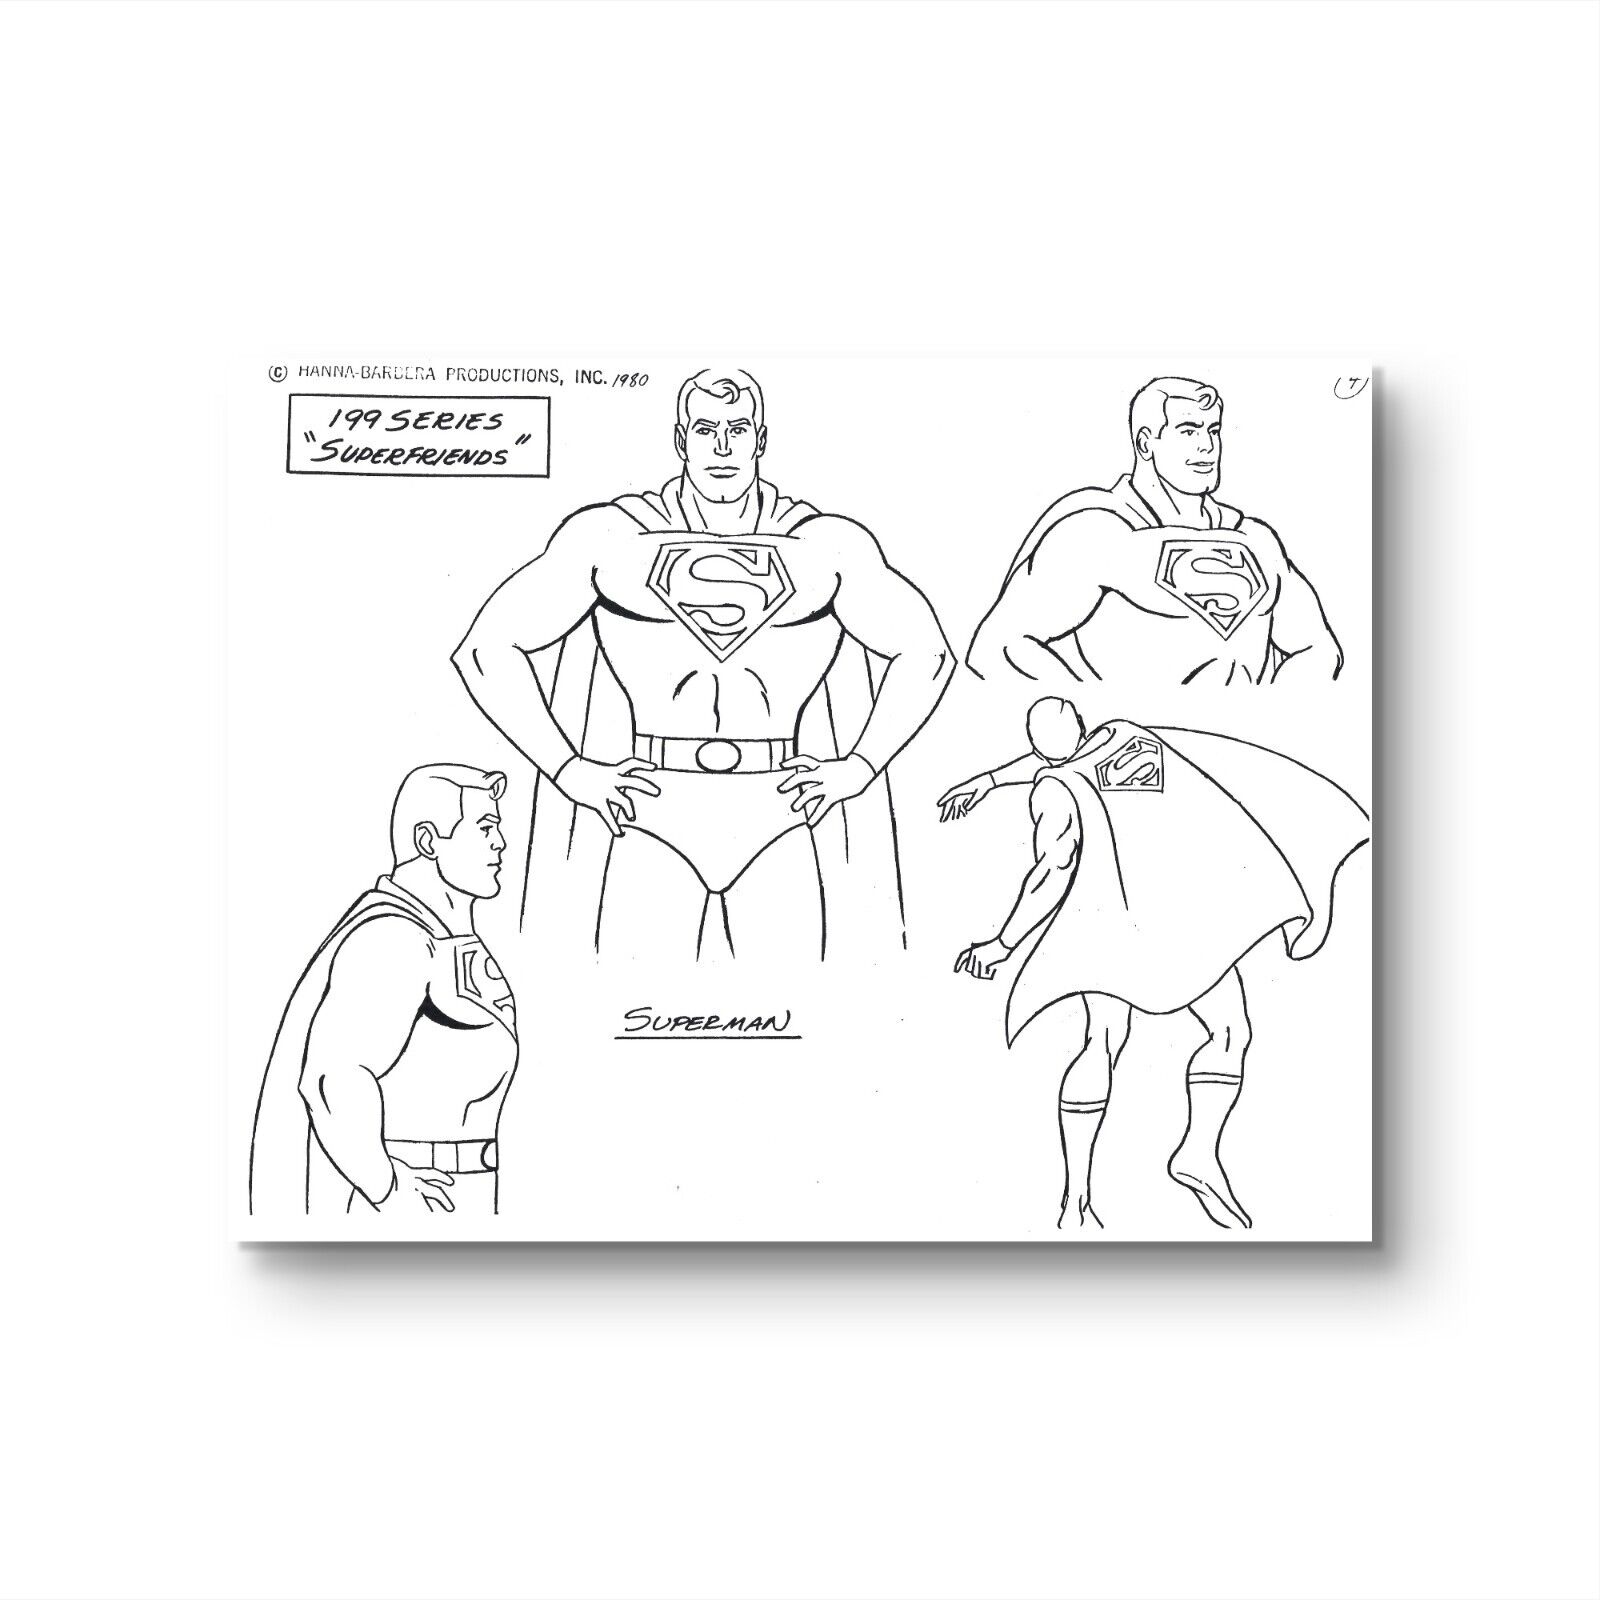 Super Friends Original Production Model Sheet: Superman, SSV1044